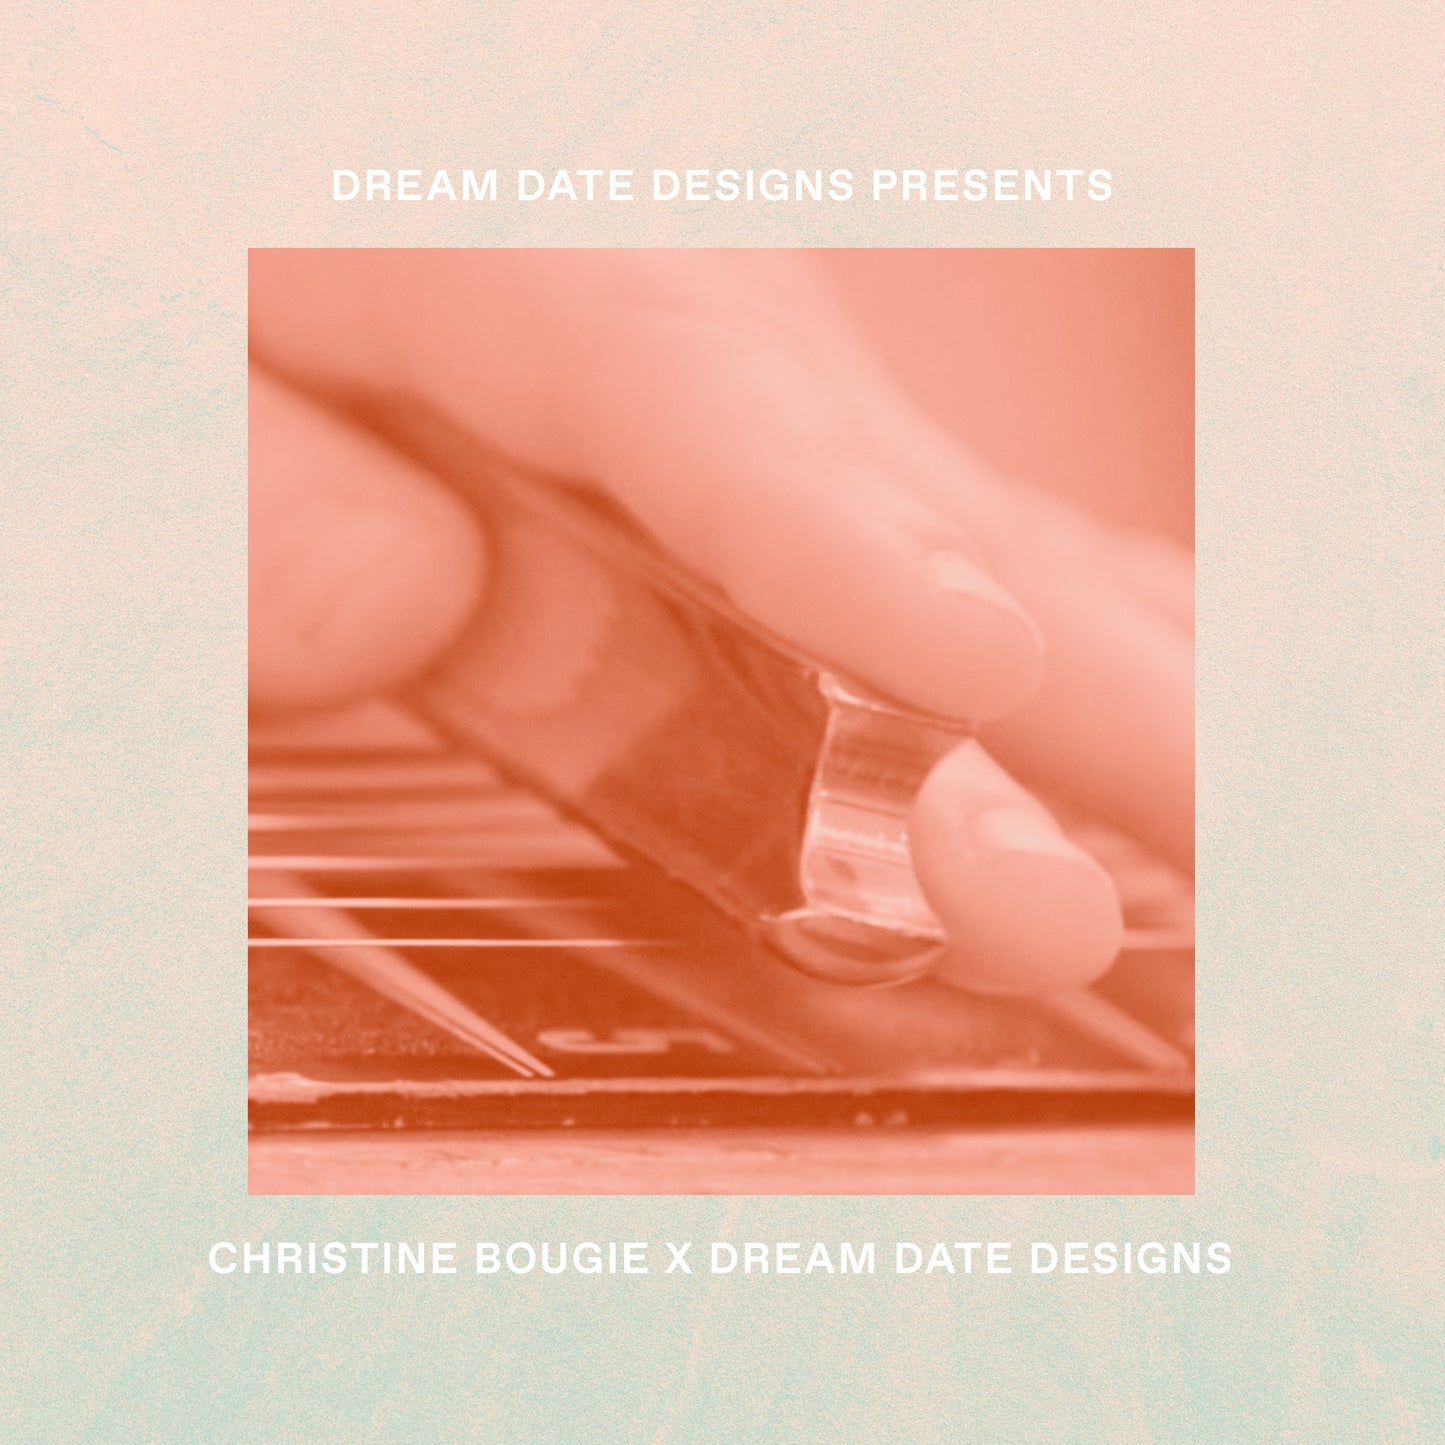 Christine Bougie x Dream Date Designs